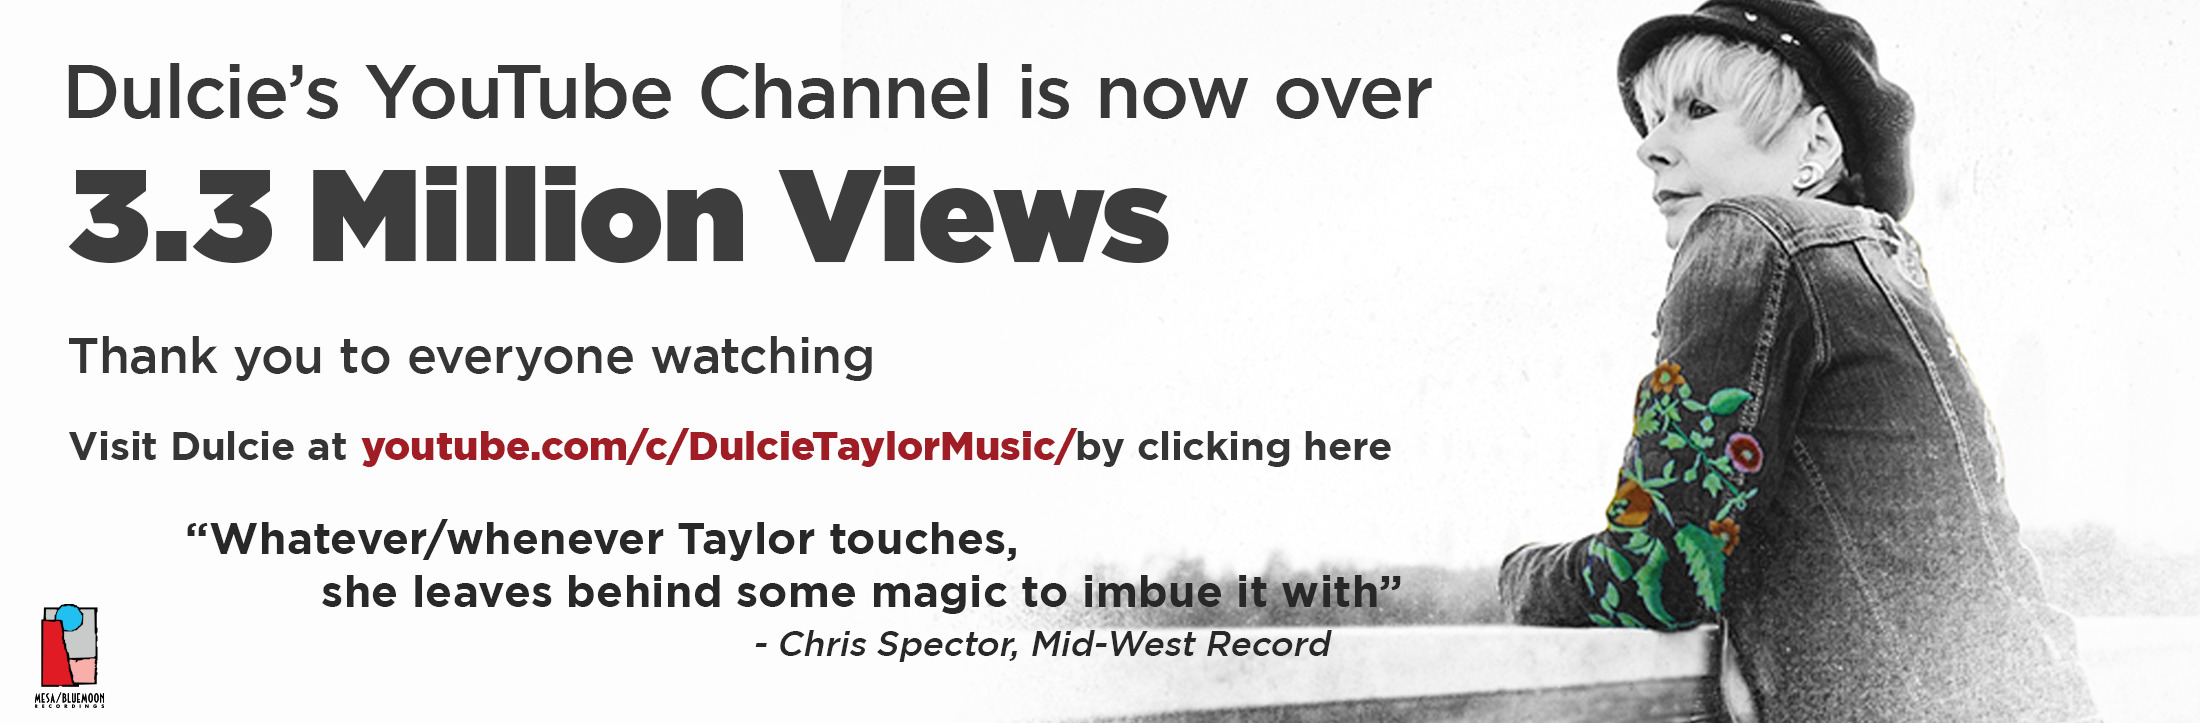 dulcie taylor 3.3 million youtube views banner